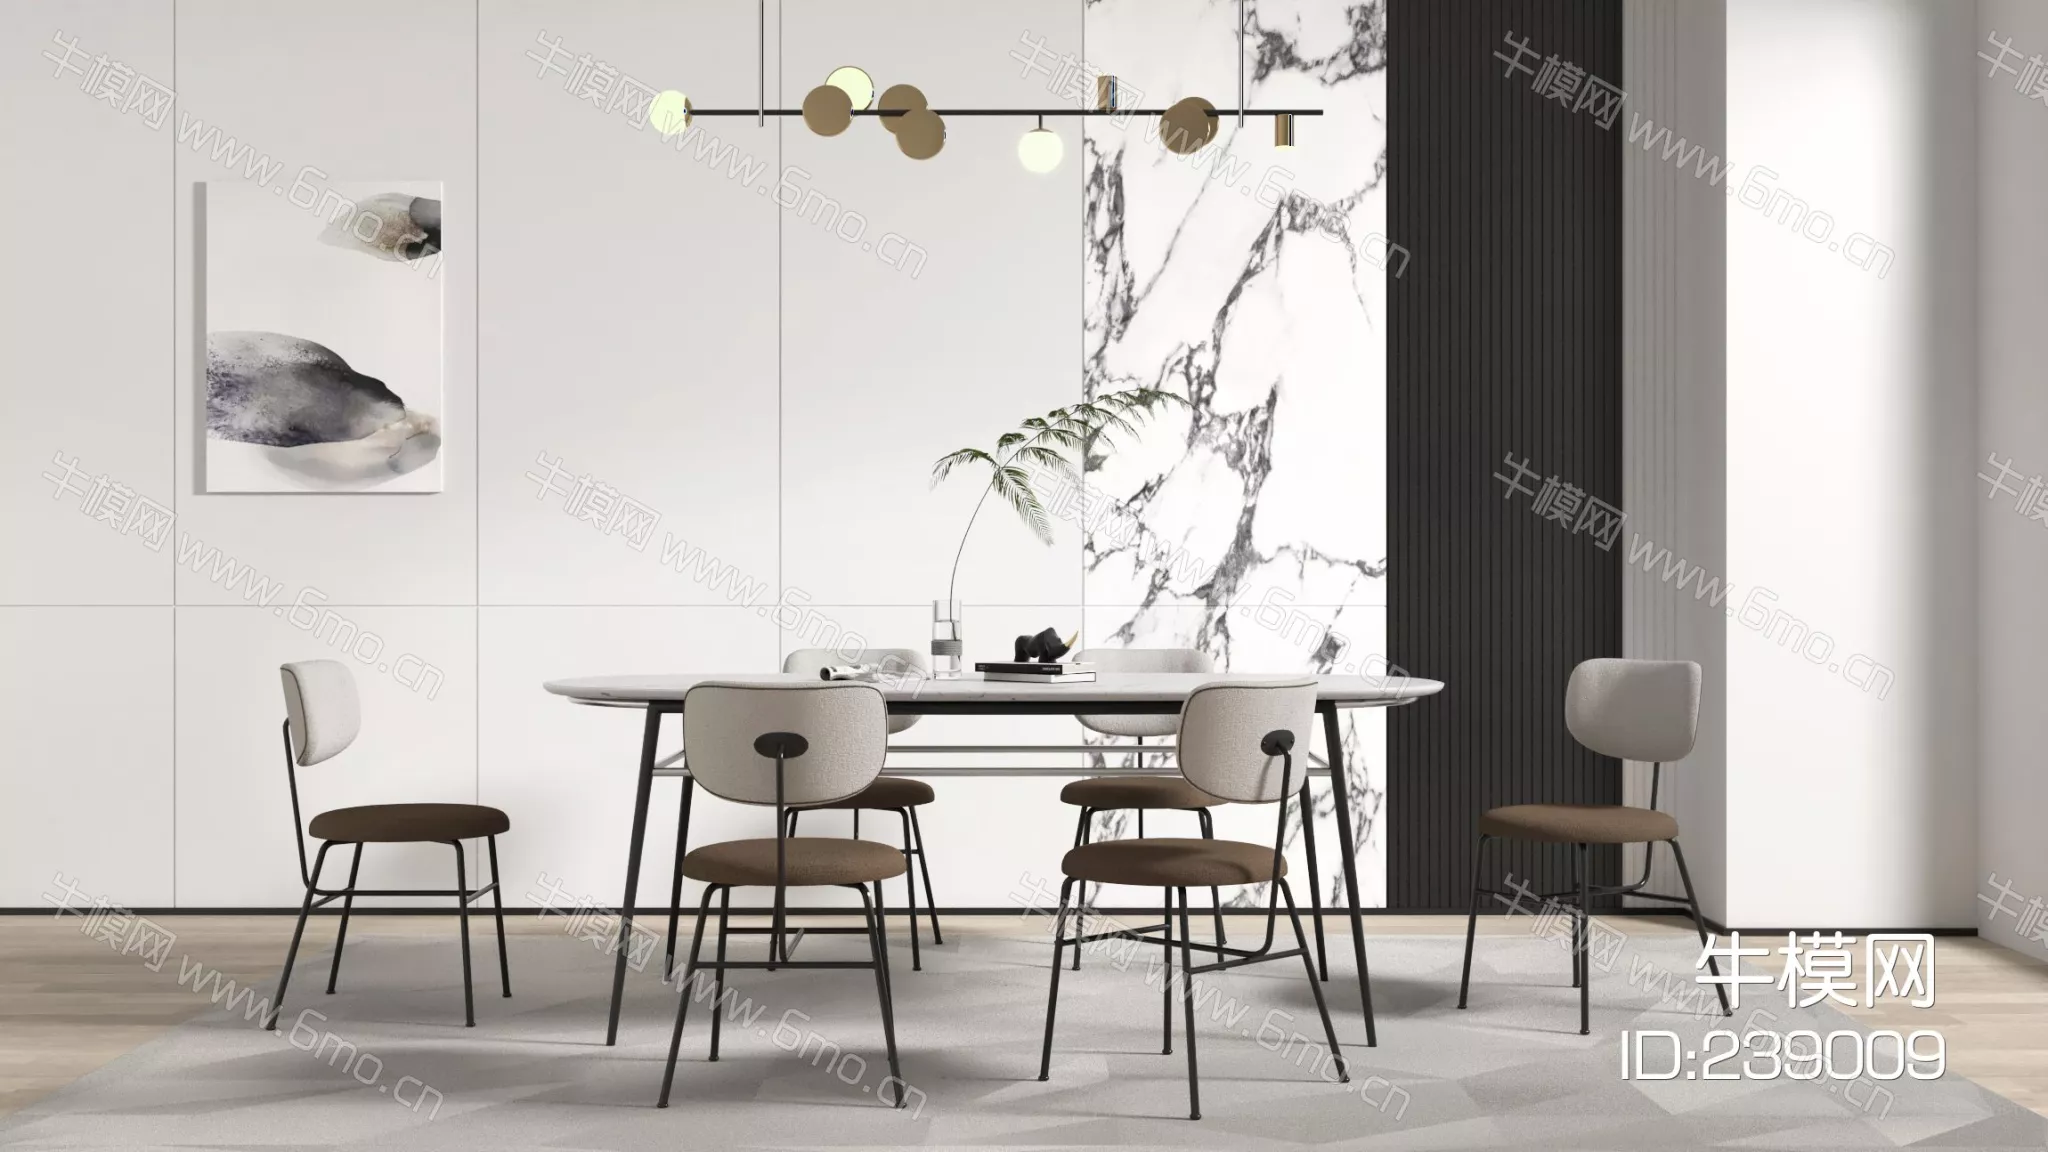 MODERN DINING TABLE SET - SKETCHUP 3D MODEL - VRAY - 239009